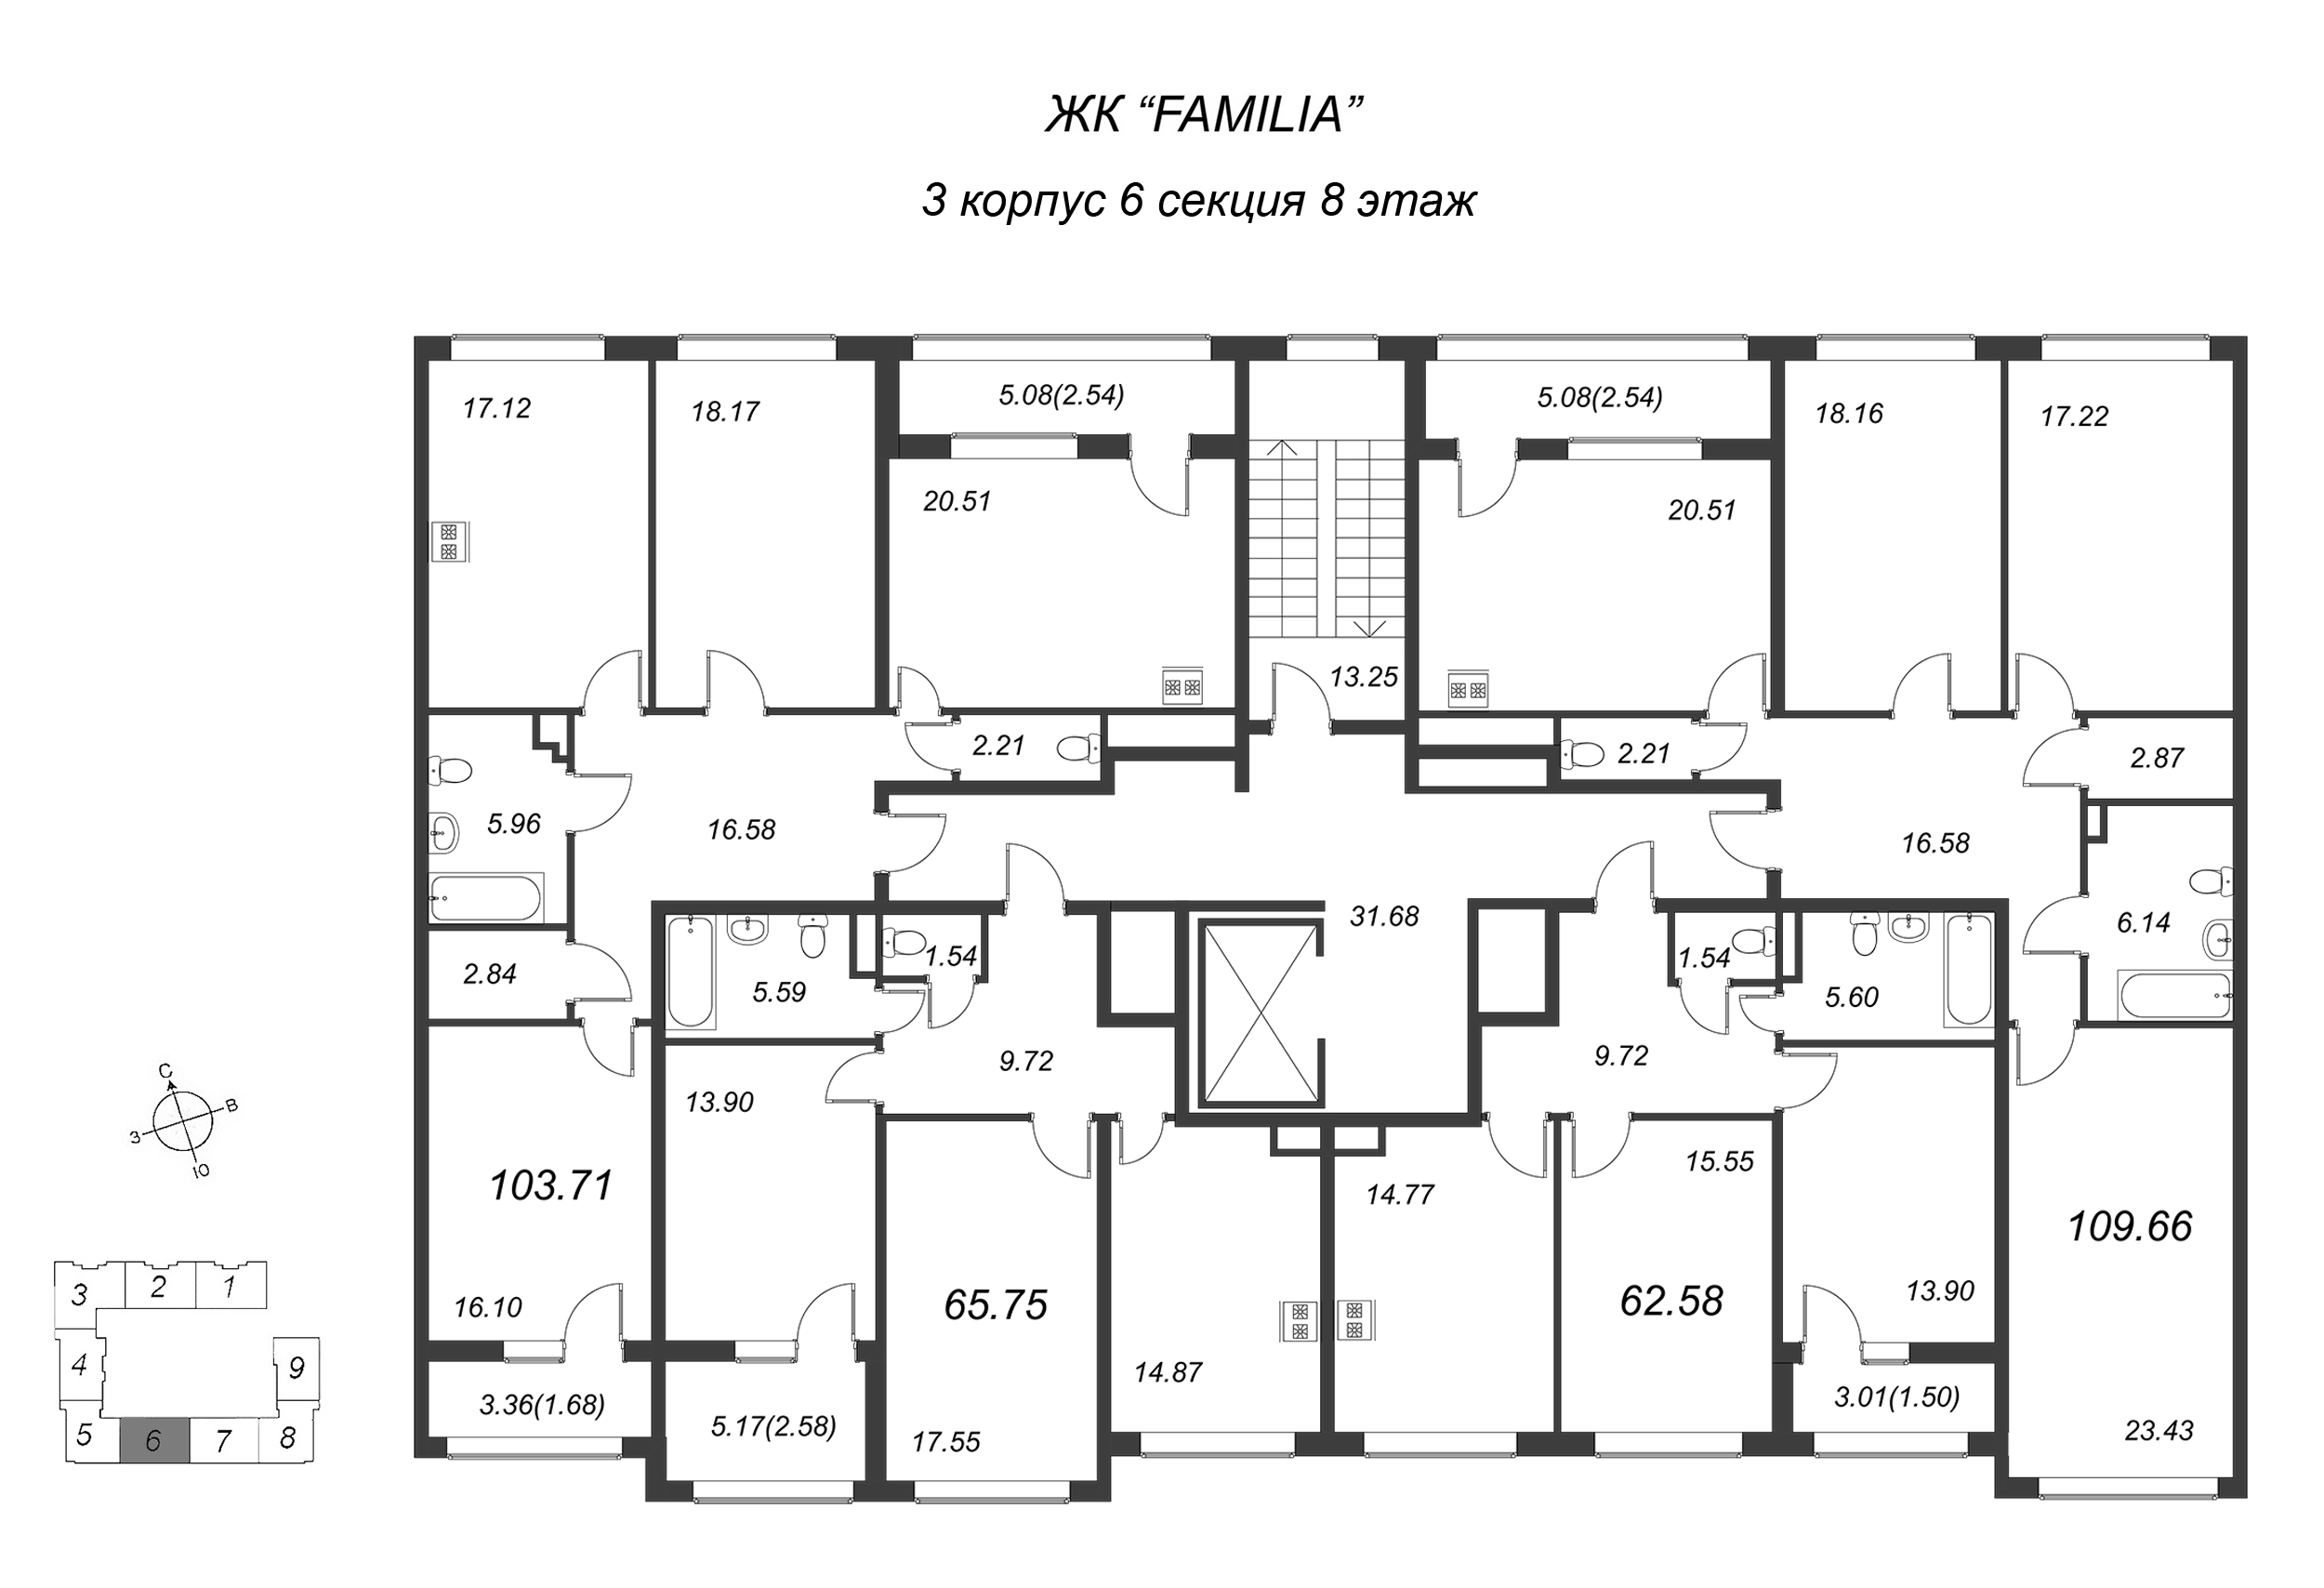 4-комнатная (Евро) квартира, 110.2 м² в ЖК "FAMILIA" - планировка этажа